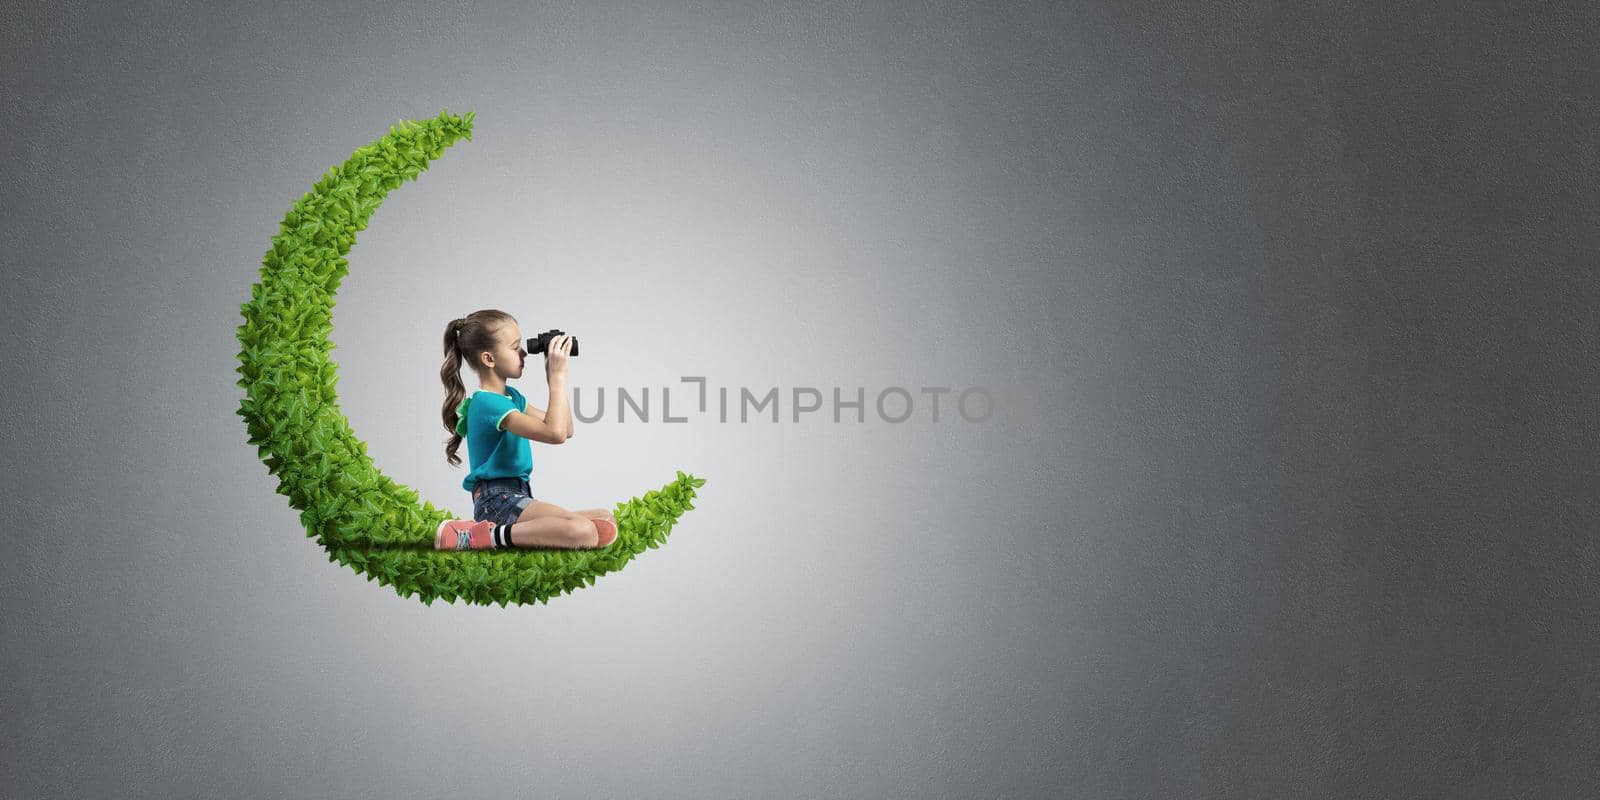 Cute kid girl sitting on green moon and looking in binoculars